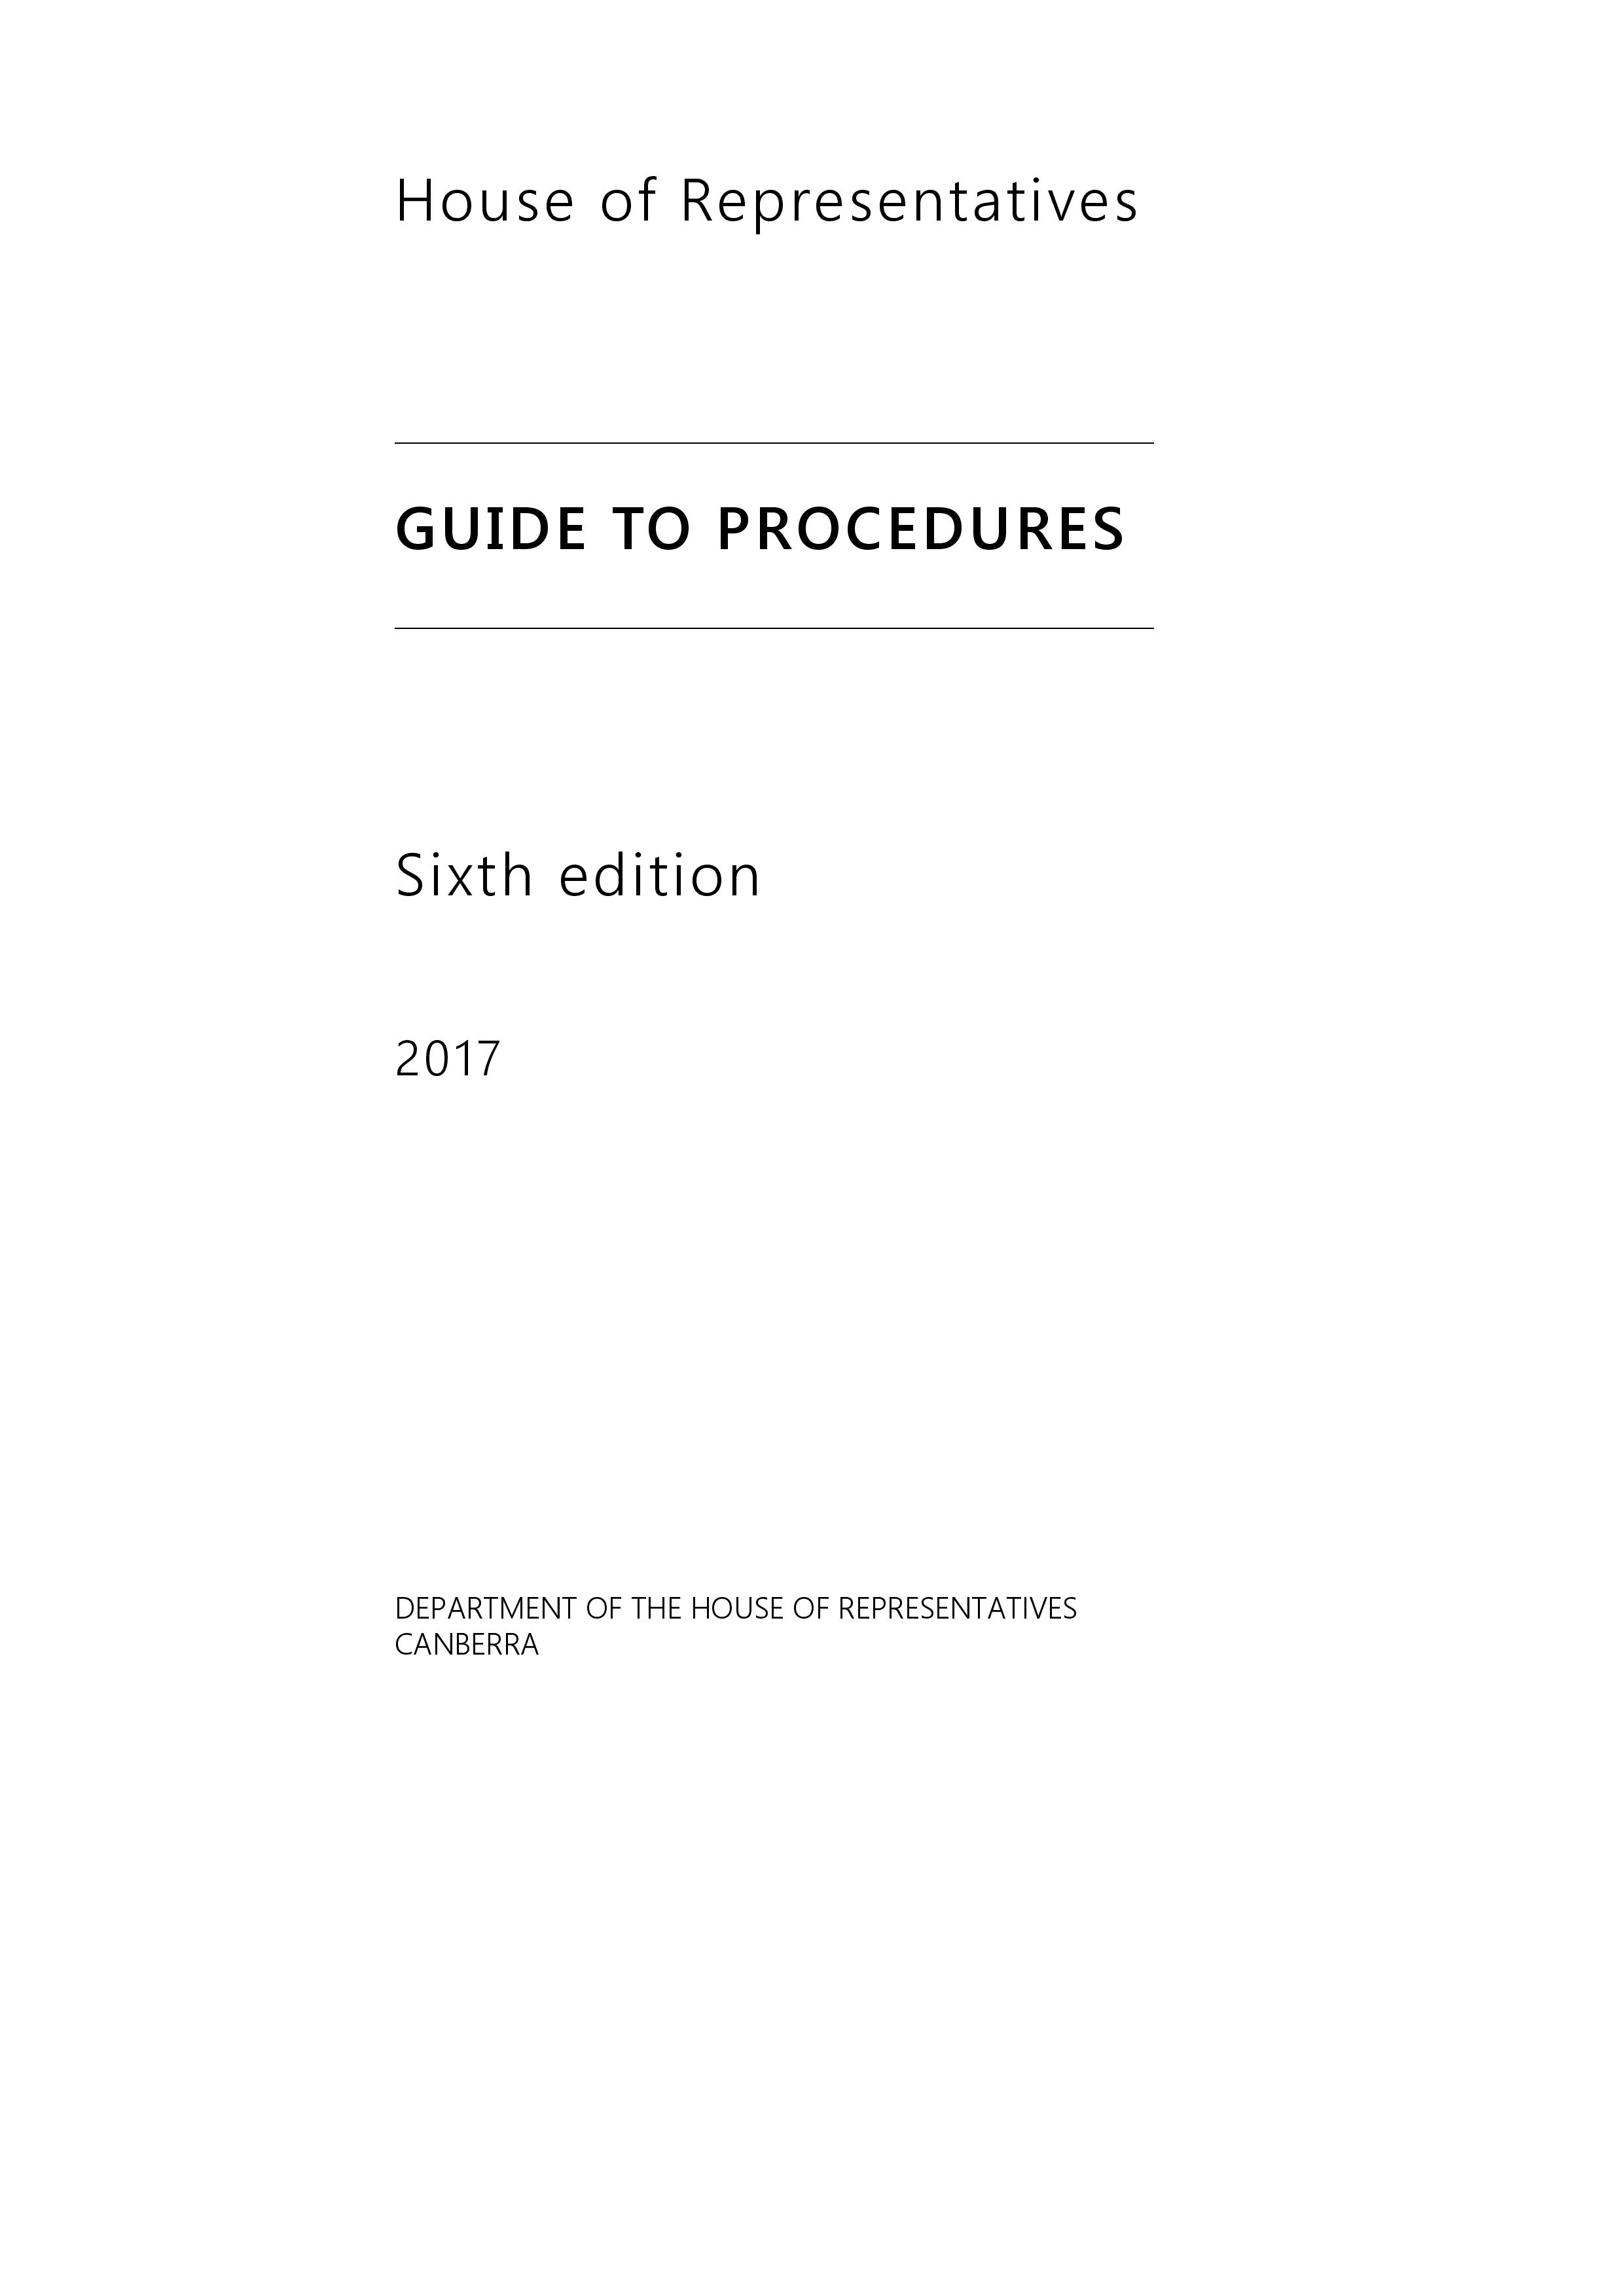 Australian House of Representatives Guide to Procedures